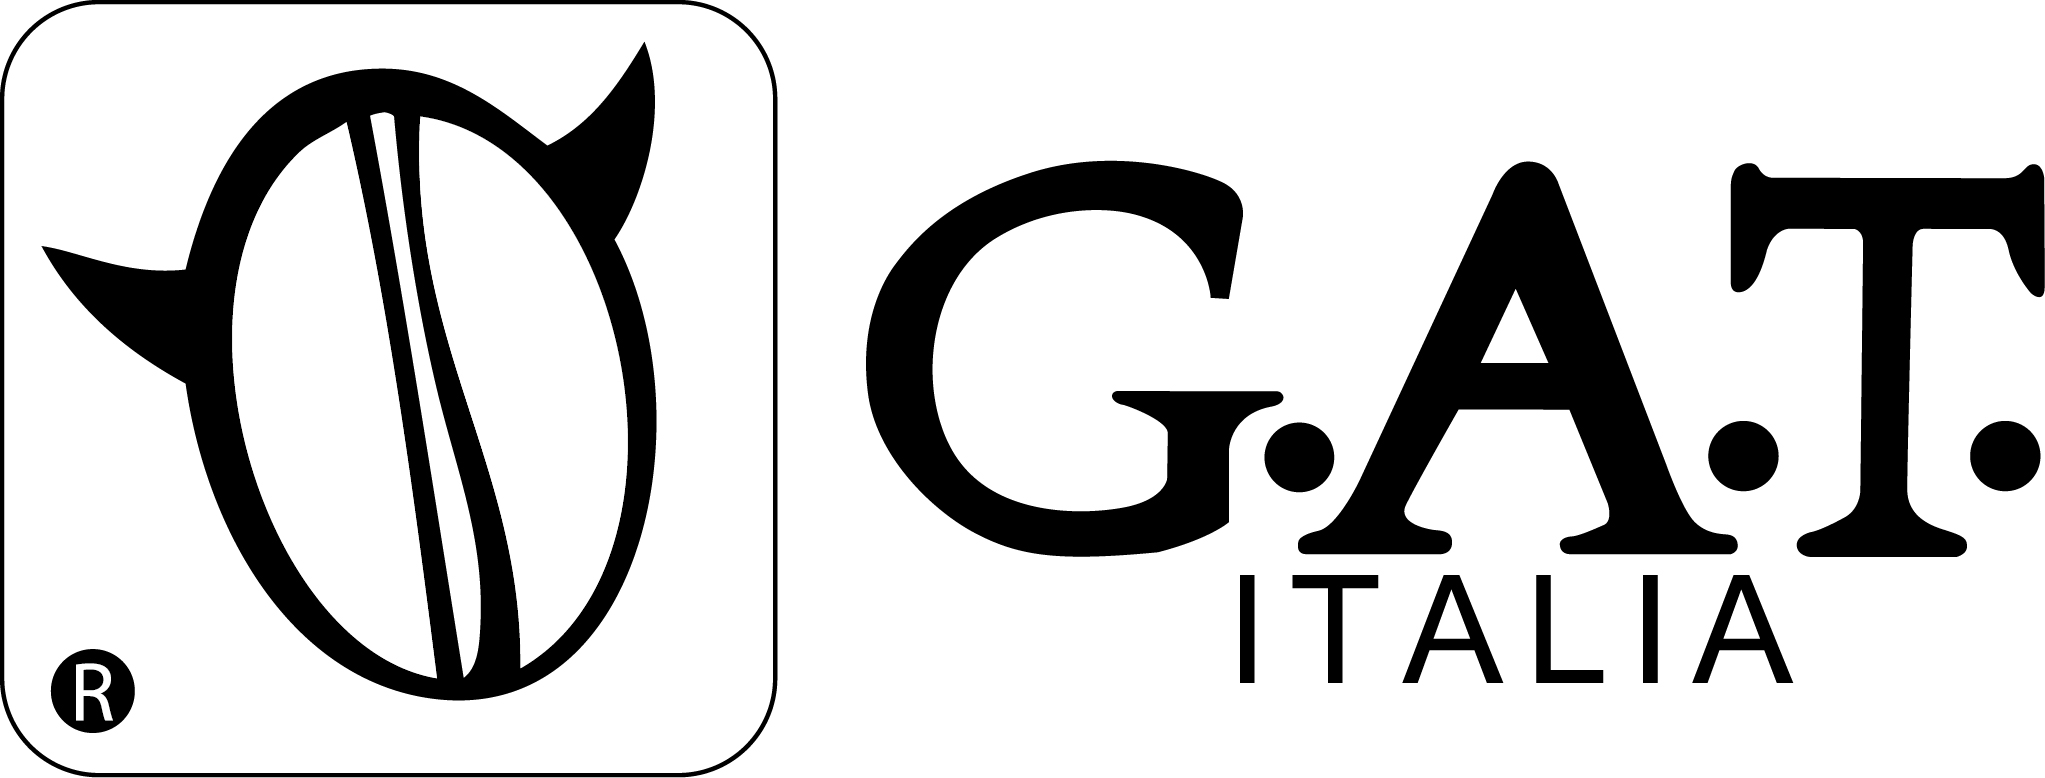 Cafetera Italiana BELLA 6 tazas roja - G.A.T. - ITALCAFE